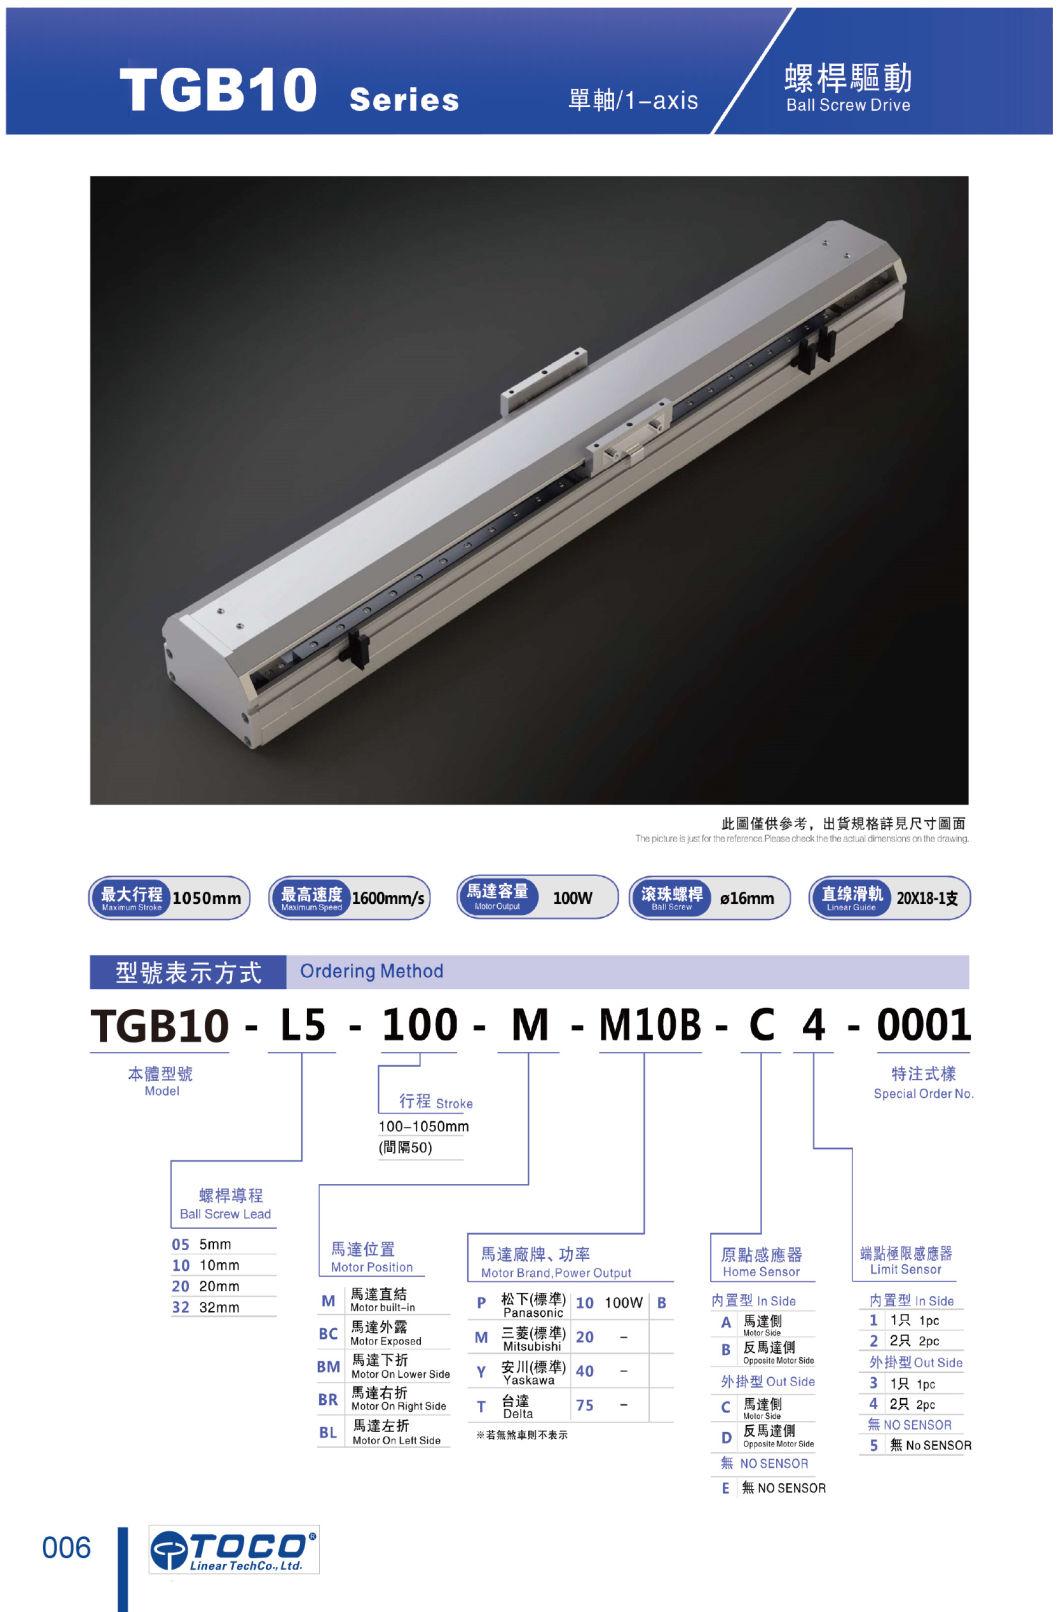 Kk86 Worktable Linear Module for Aluminium Steel Laser Cutter and Engraver Machine